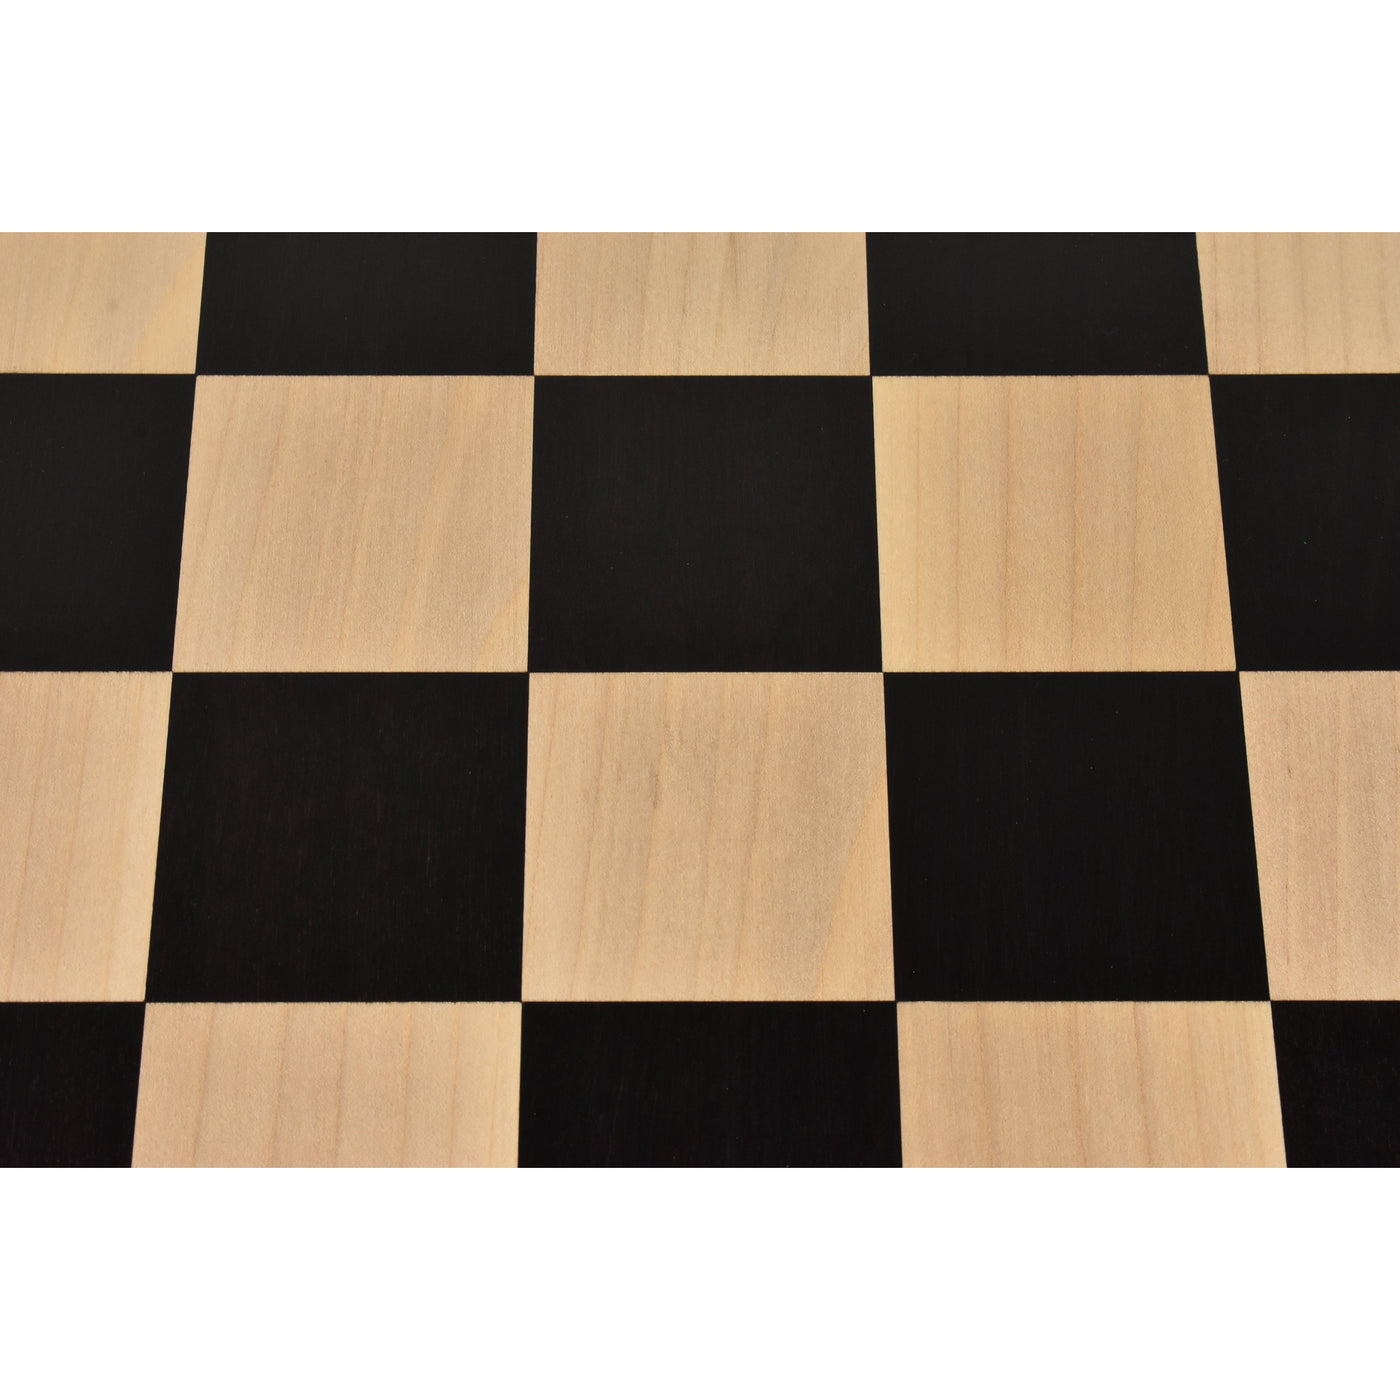 Buy online Maple Wood Chessboard  Matt Finish